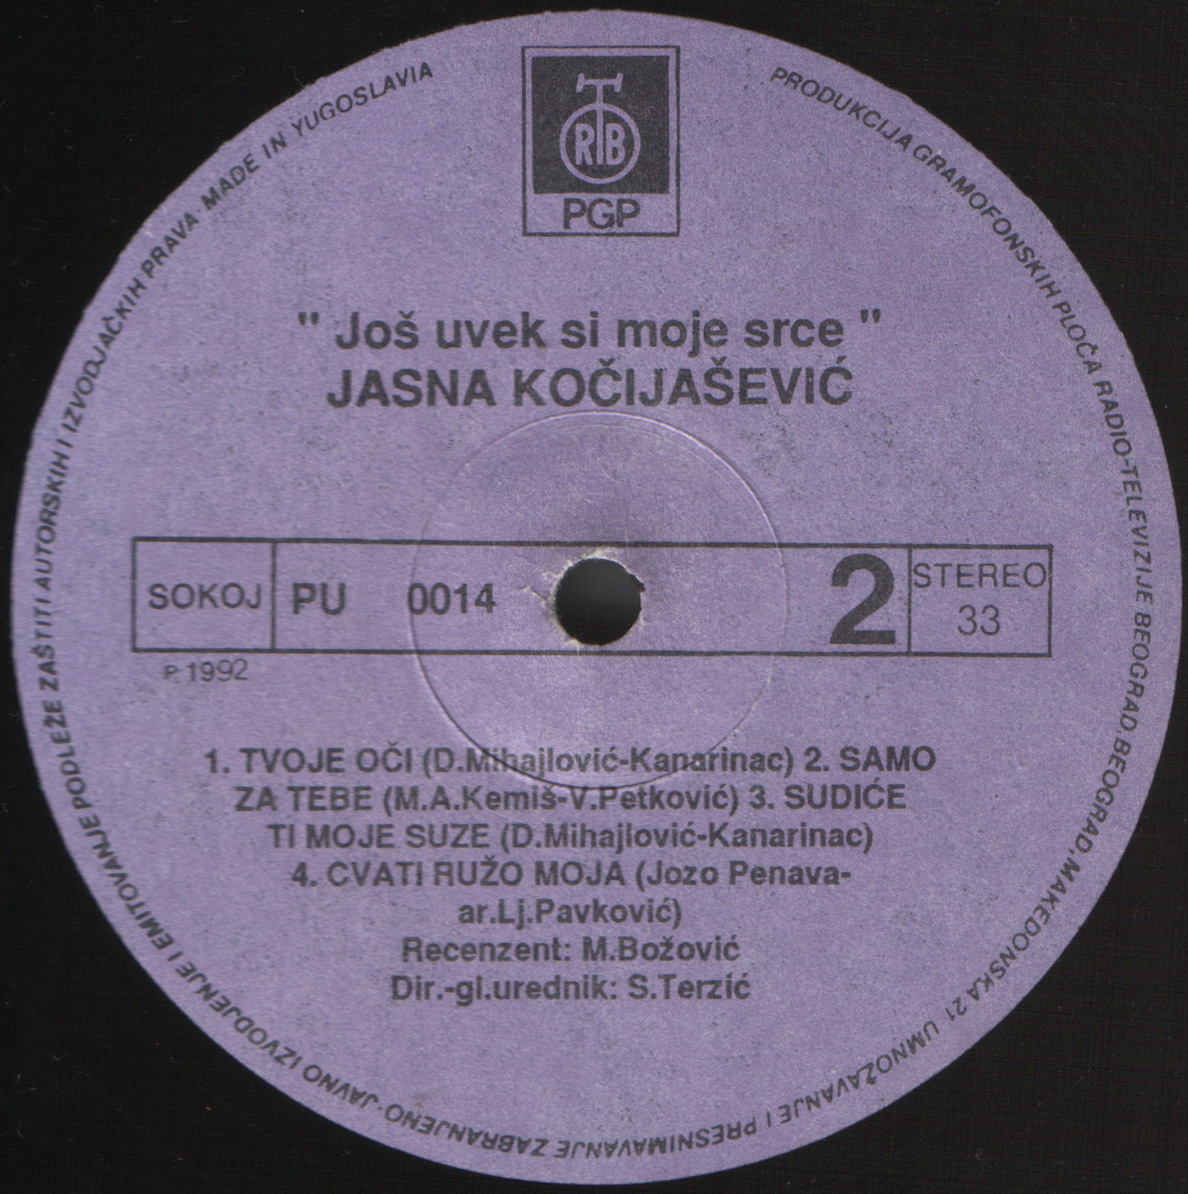 Jasna Kocijasevic 1992 B